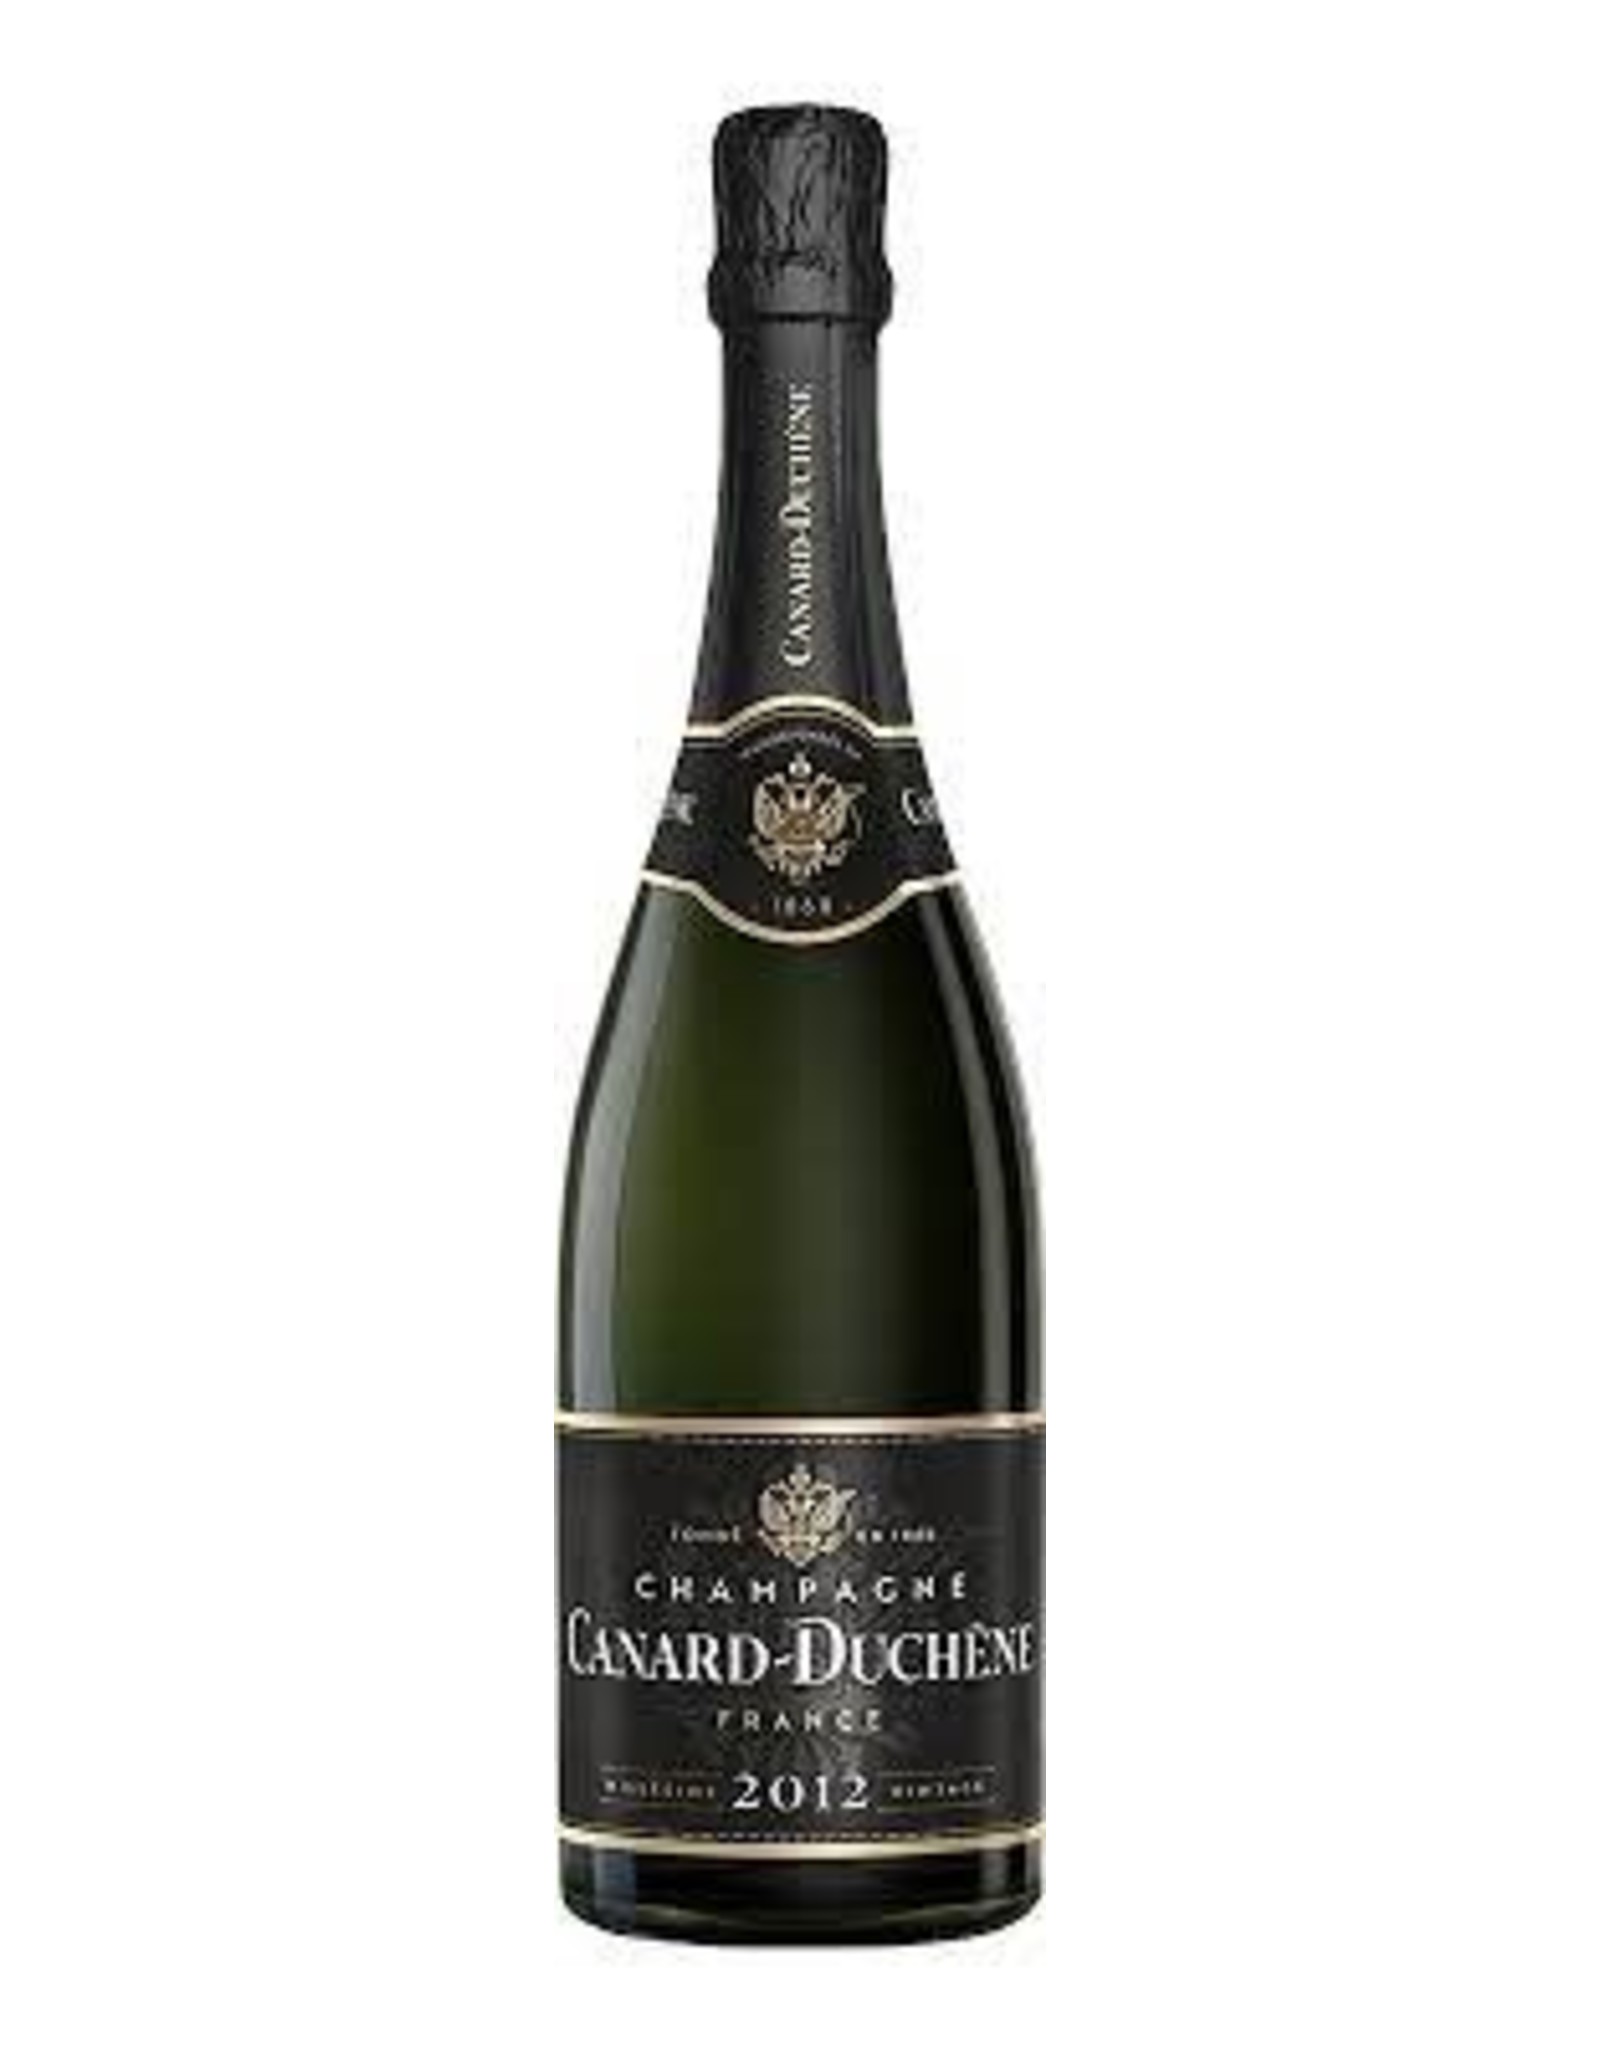 Canard-Duchene Champagne 2012